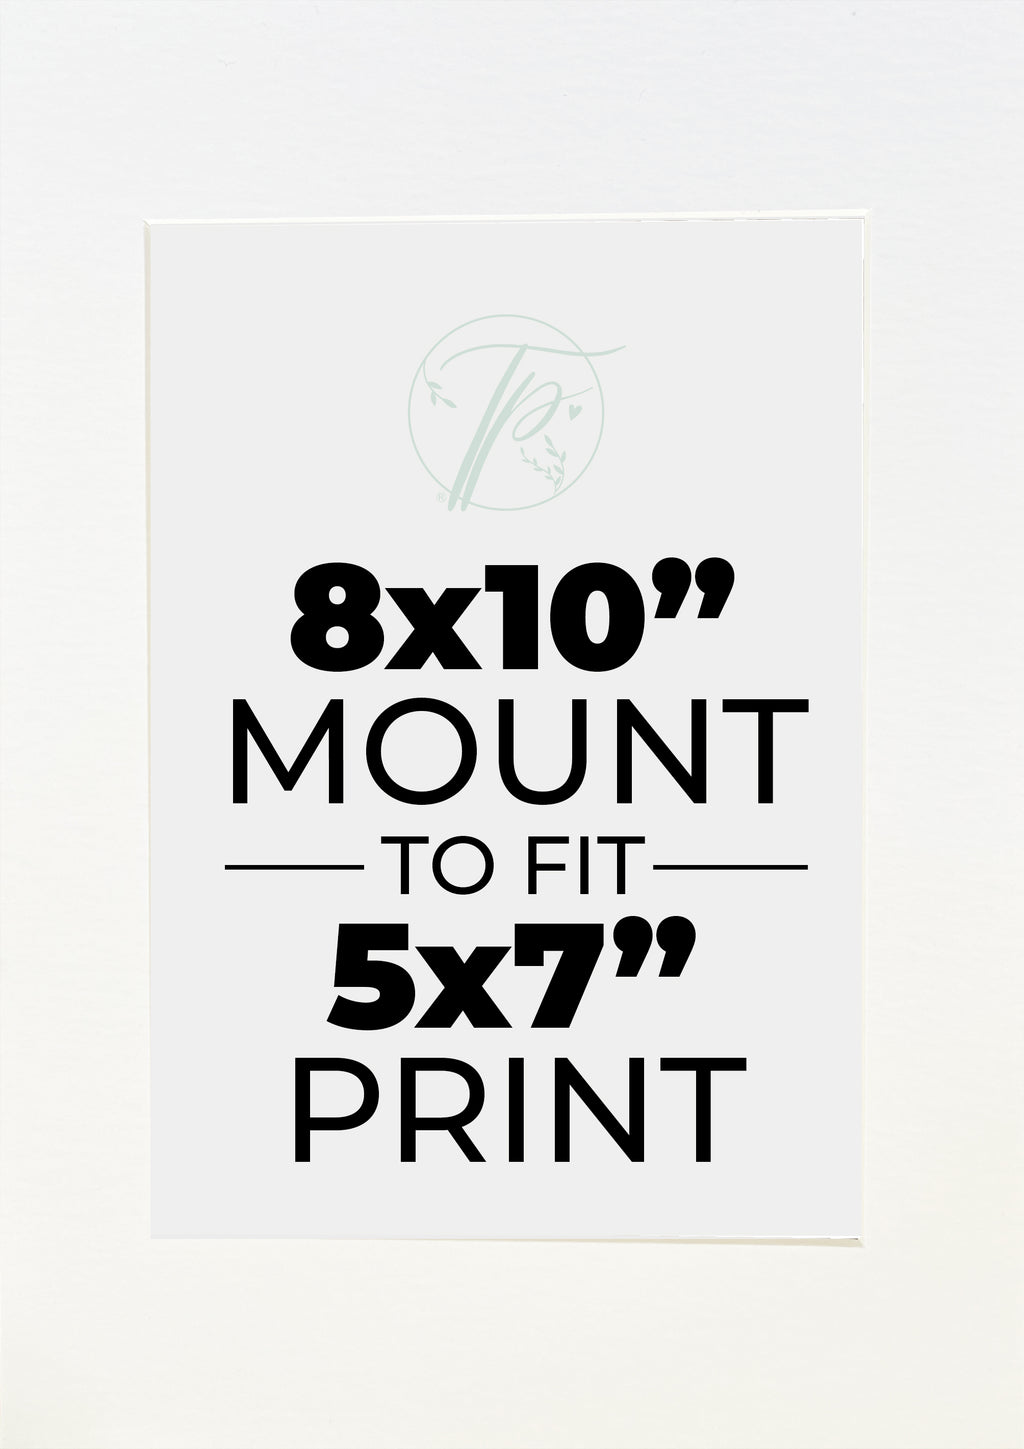 8x10" Mount To Fit 5x7" Print